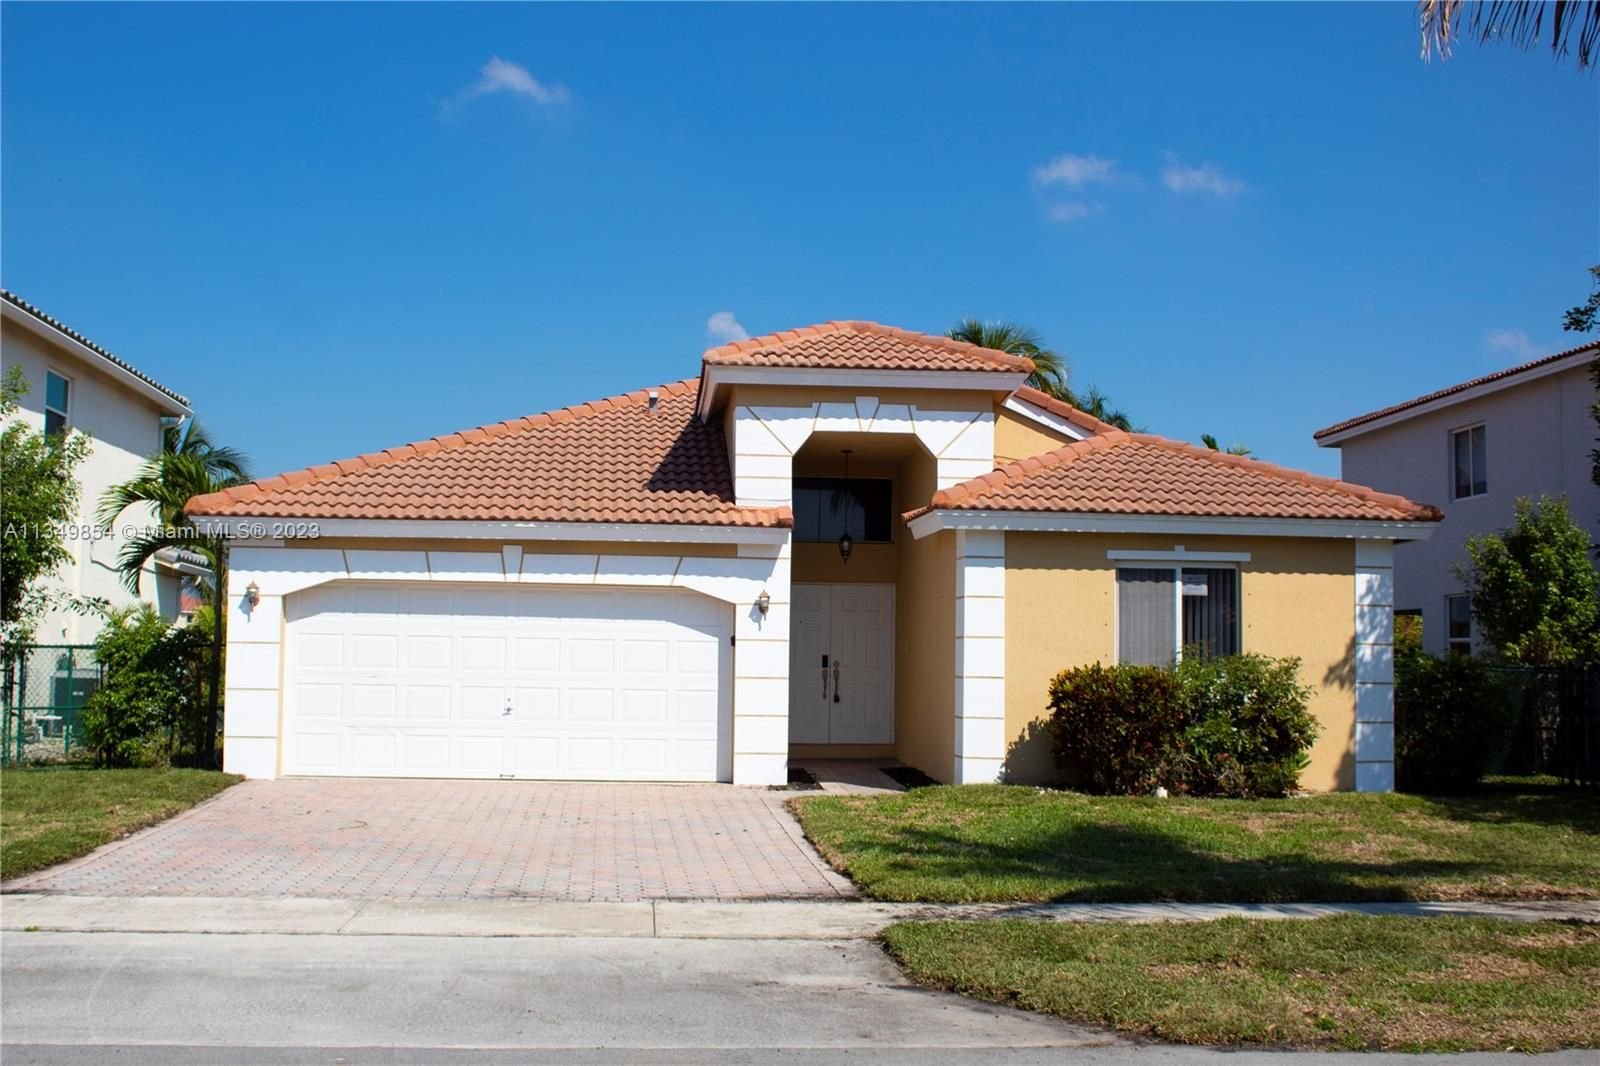 Real estate property located at 13221 53rd St, Broward County, MIRAMAR PATIO HOMES, Miramar, FL